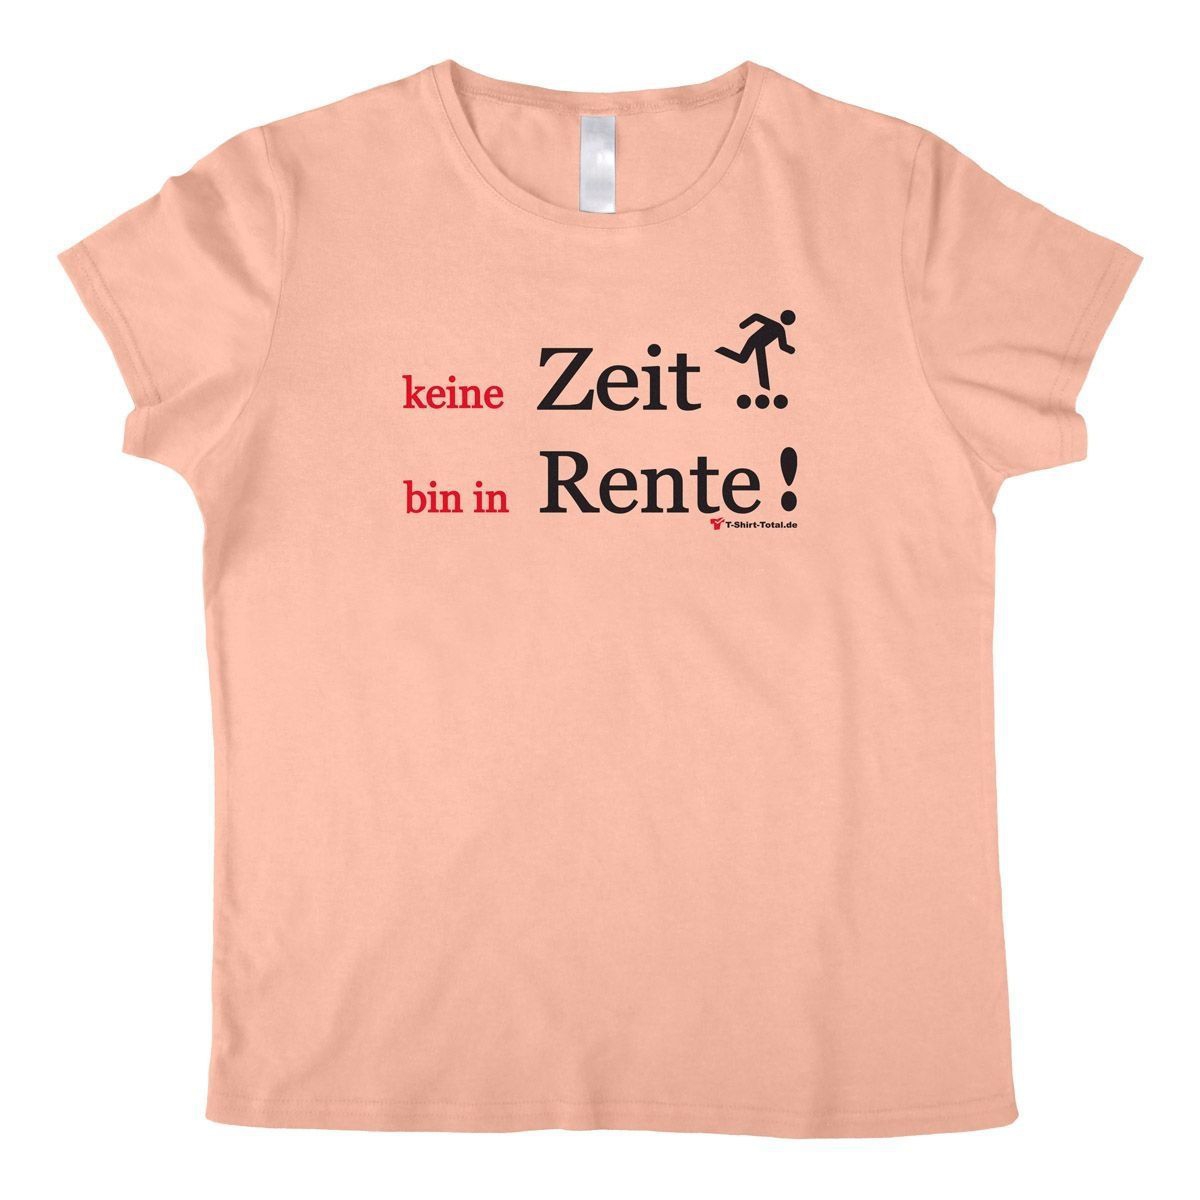 Bin in Rente Woman T-Shirt rosa Extra Large